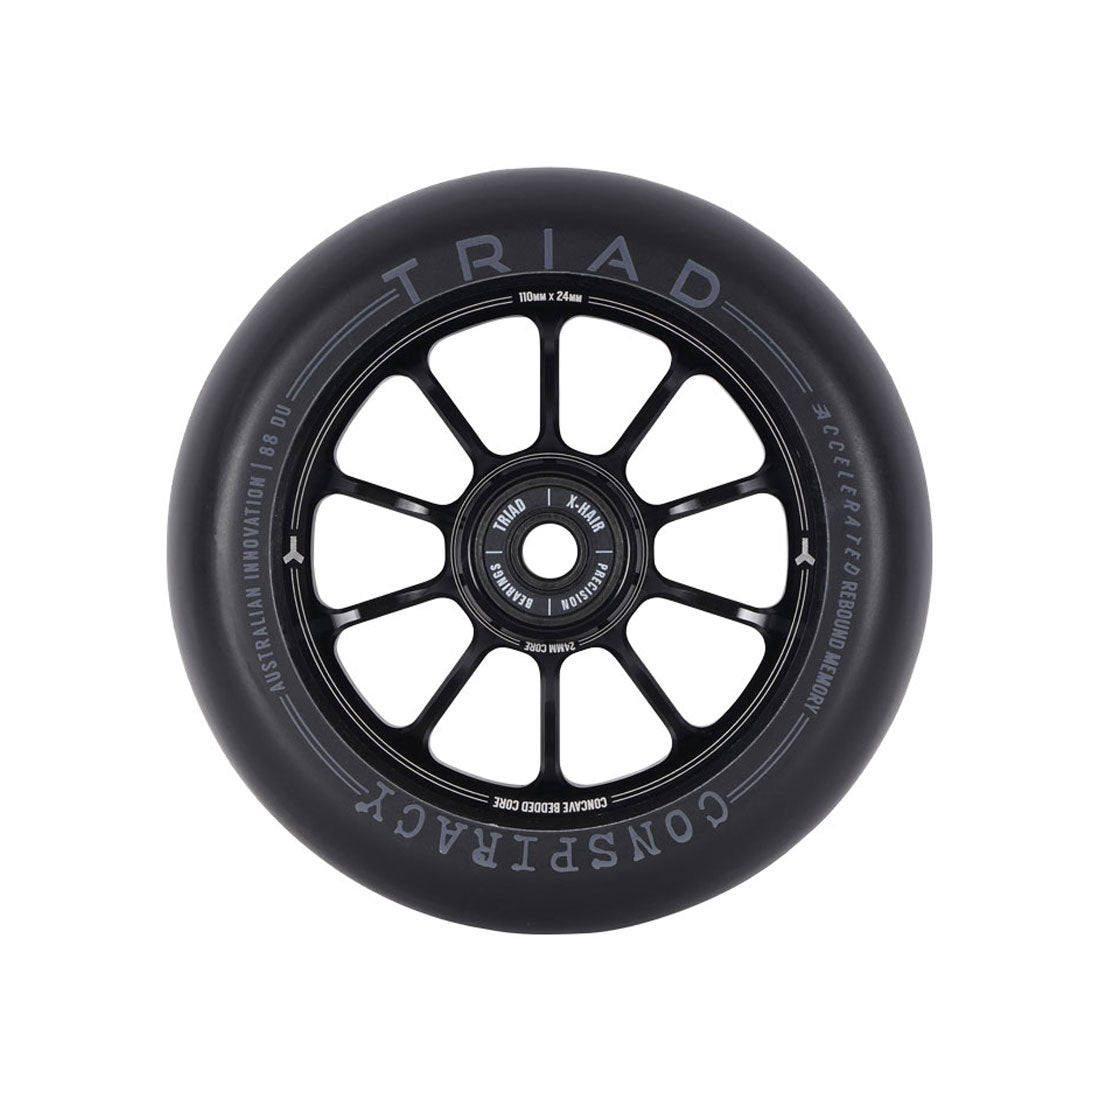 Triad Conspiracy 110mm Wheel - Ano Black Scooter Wheels